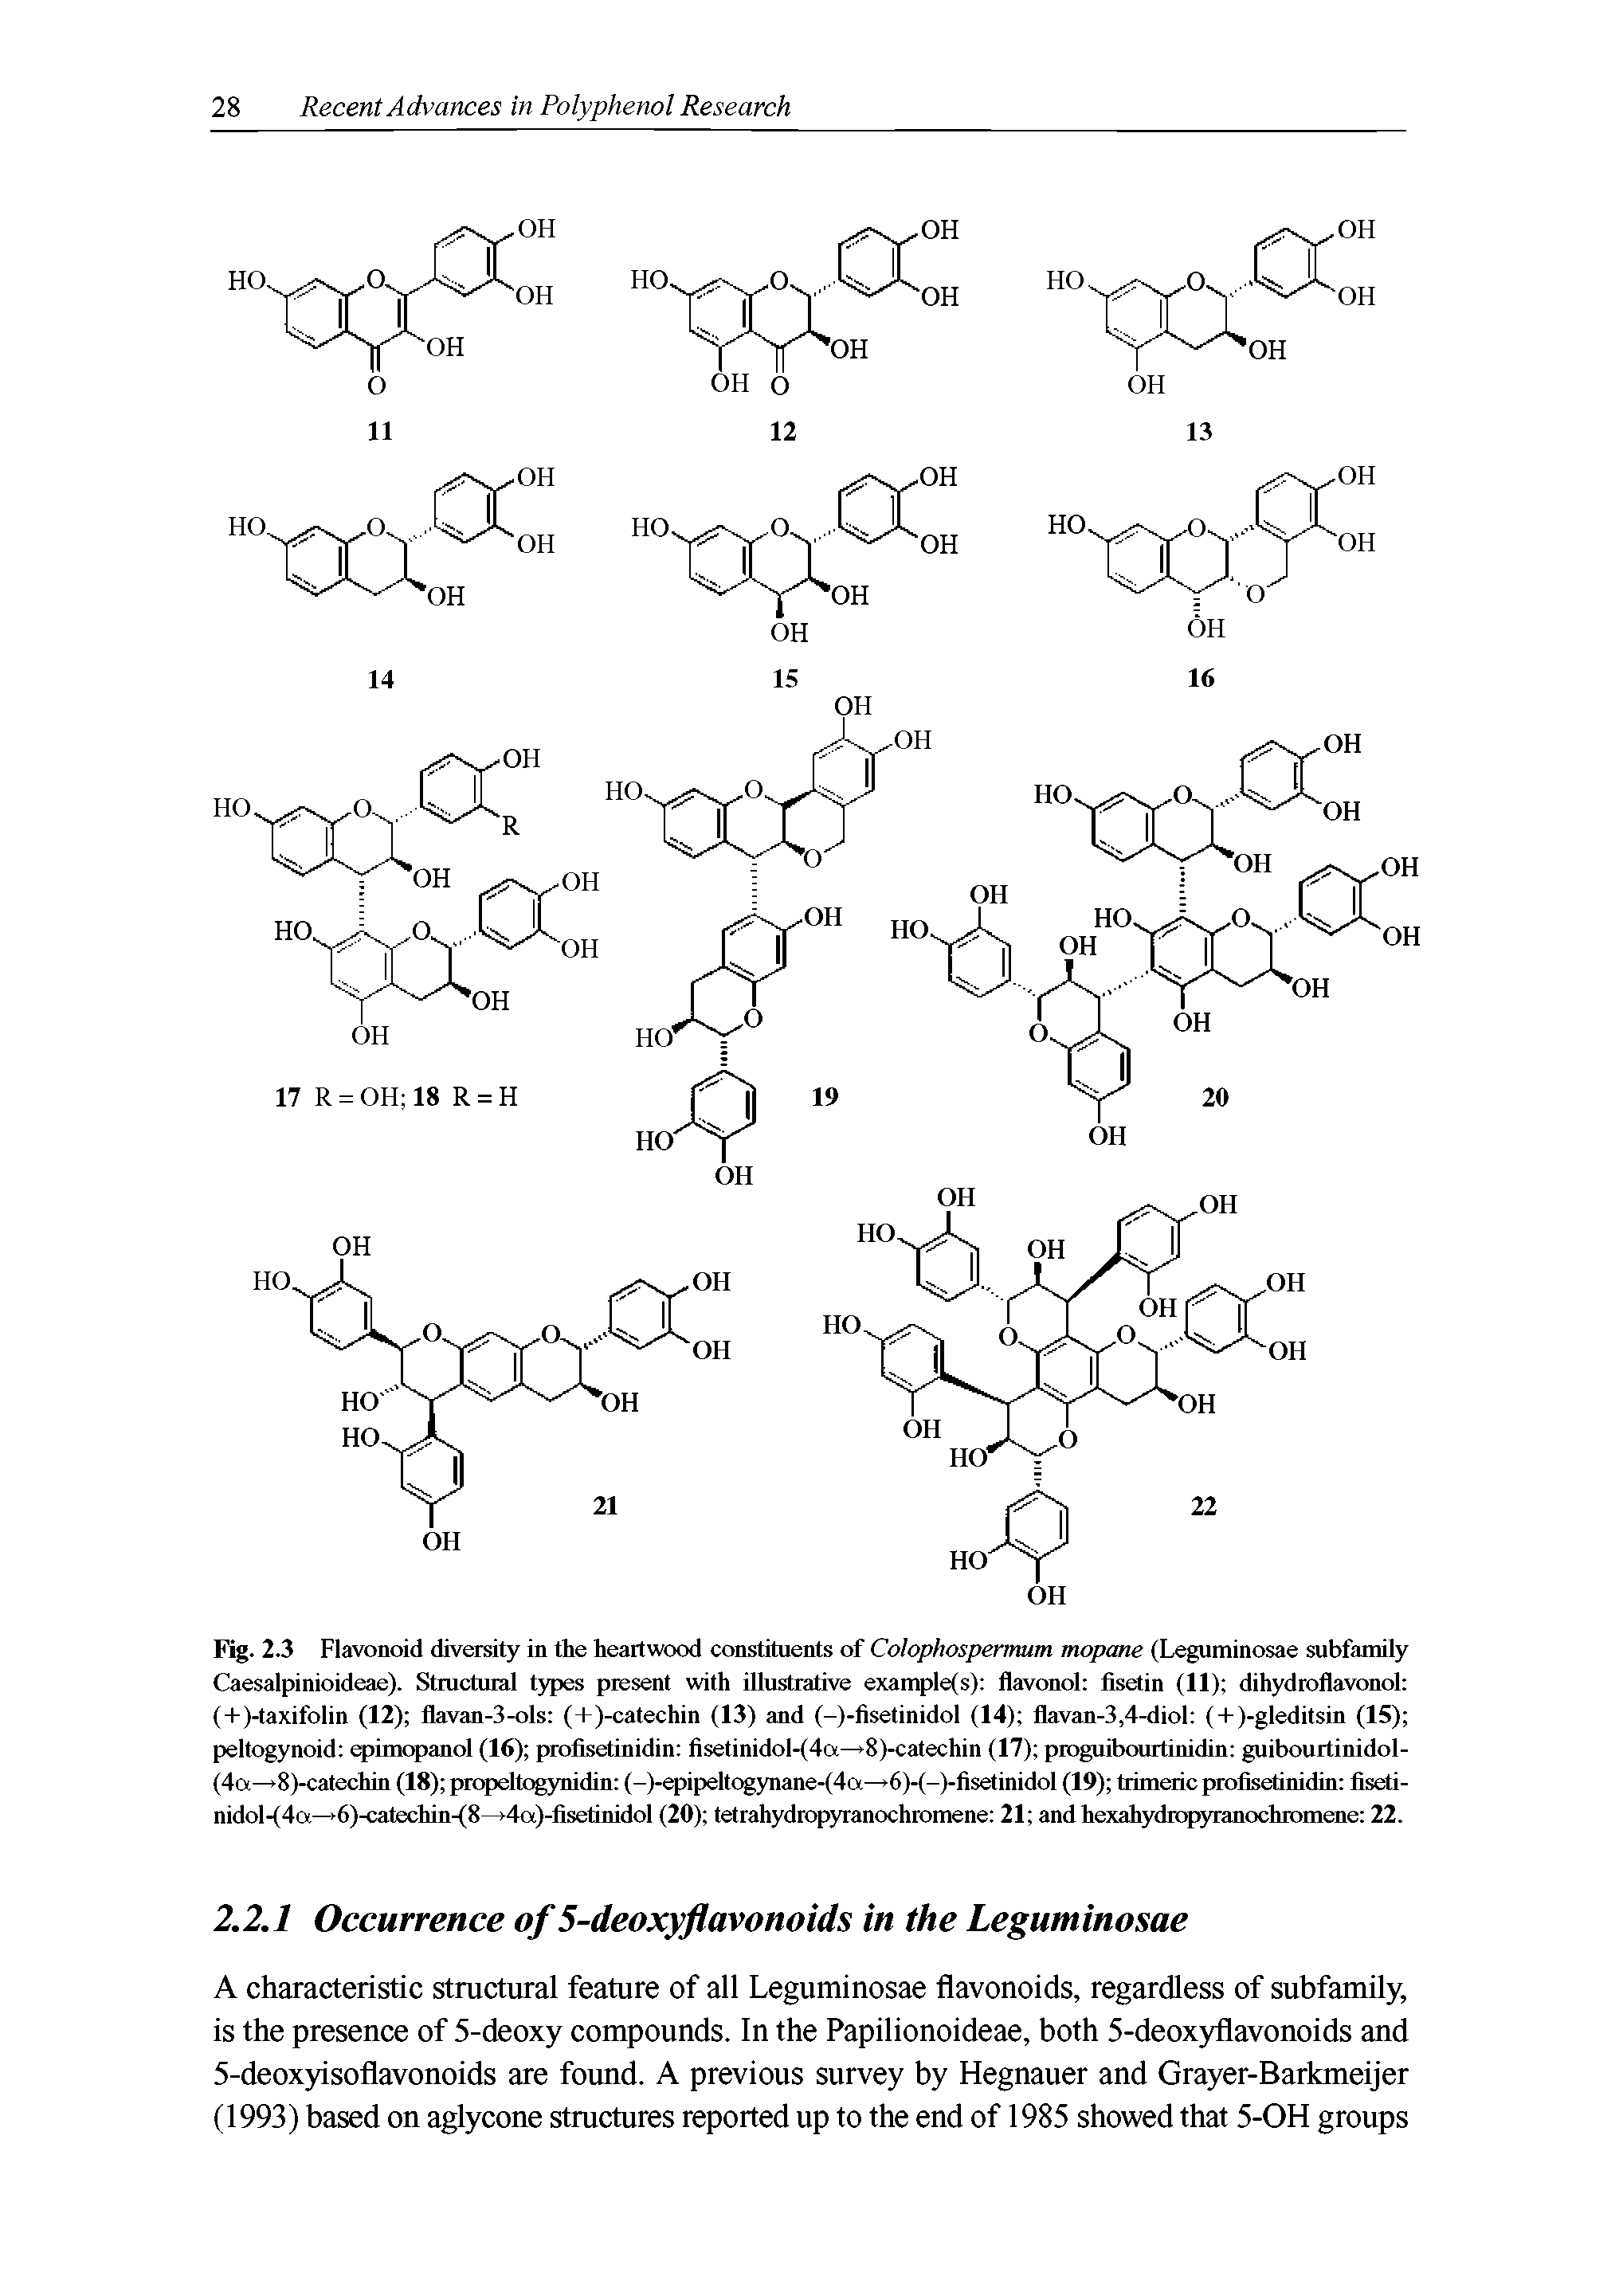 Fig. 2.3 Flavonoid diversity in the heartwood constituents of Colophospermum mopane (Leguminosae subfamily Caesalpinioideae). Stmctural types present with illustrative example(s) flavonol fisetin (11) dihydroflavonol (+)-taxifolin (12) flavan-3-ols (+)-catechin (13) and (-)-fisetinidol (14) flavan-3,4-diol (+ )-gleditsin (15) peltogynoid epimopanol (16) profisetinidin fisetinidol-(4a 8)-catechin (17) proguibourtinidin guibourtinidol-(4a— 8)-catechin (18) propeltogynidin (-)-epipeltogynane-(4a 6)-(-)-fisetinidol (19) trimeric profisetinidin fiseti-nidol.(4a— 6)-catechin-(8— 4a)-fisetinidol (20) tetrahydropyranochromene 21 and hexahydropyranochiomene 22.